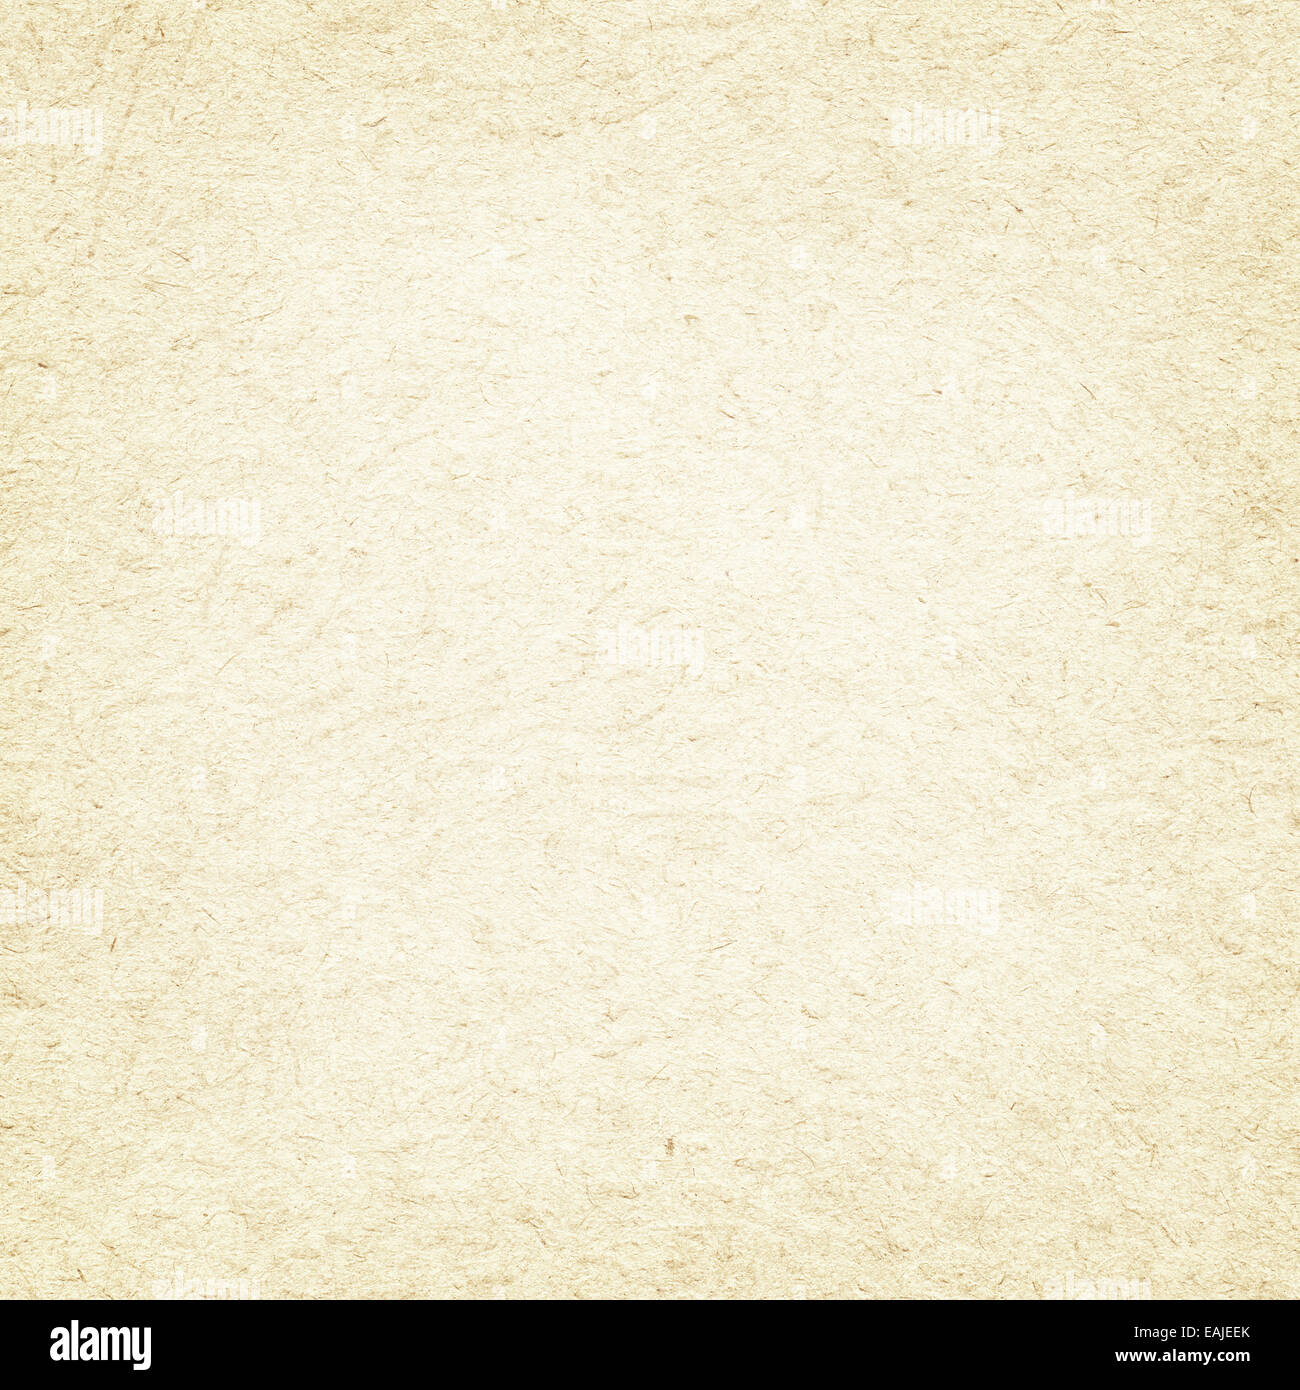 Beige paper texture, light background Stock Photo